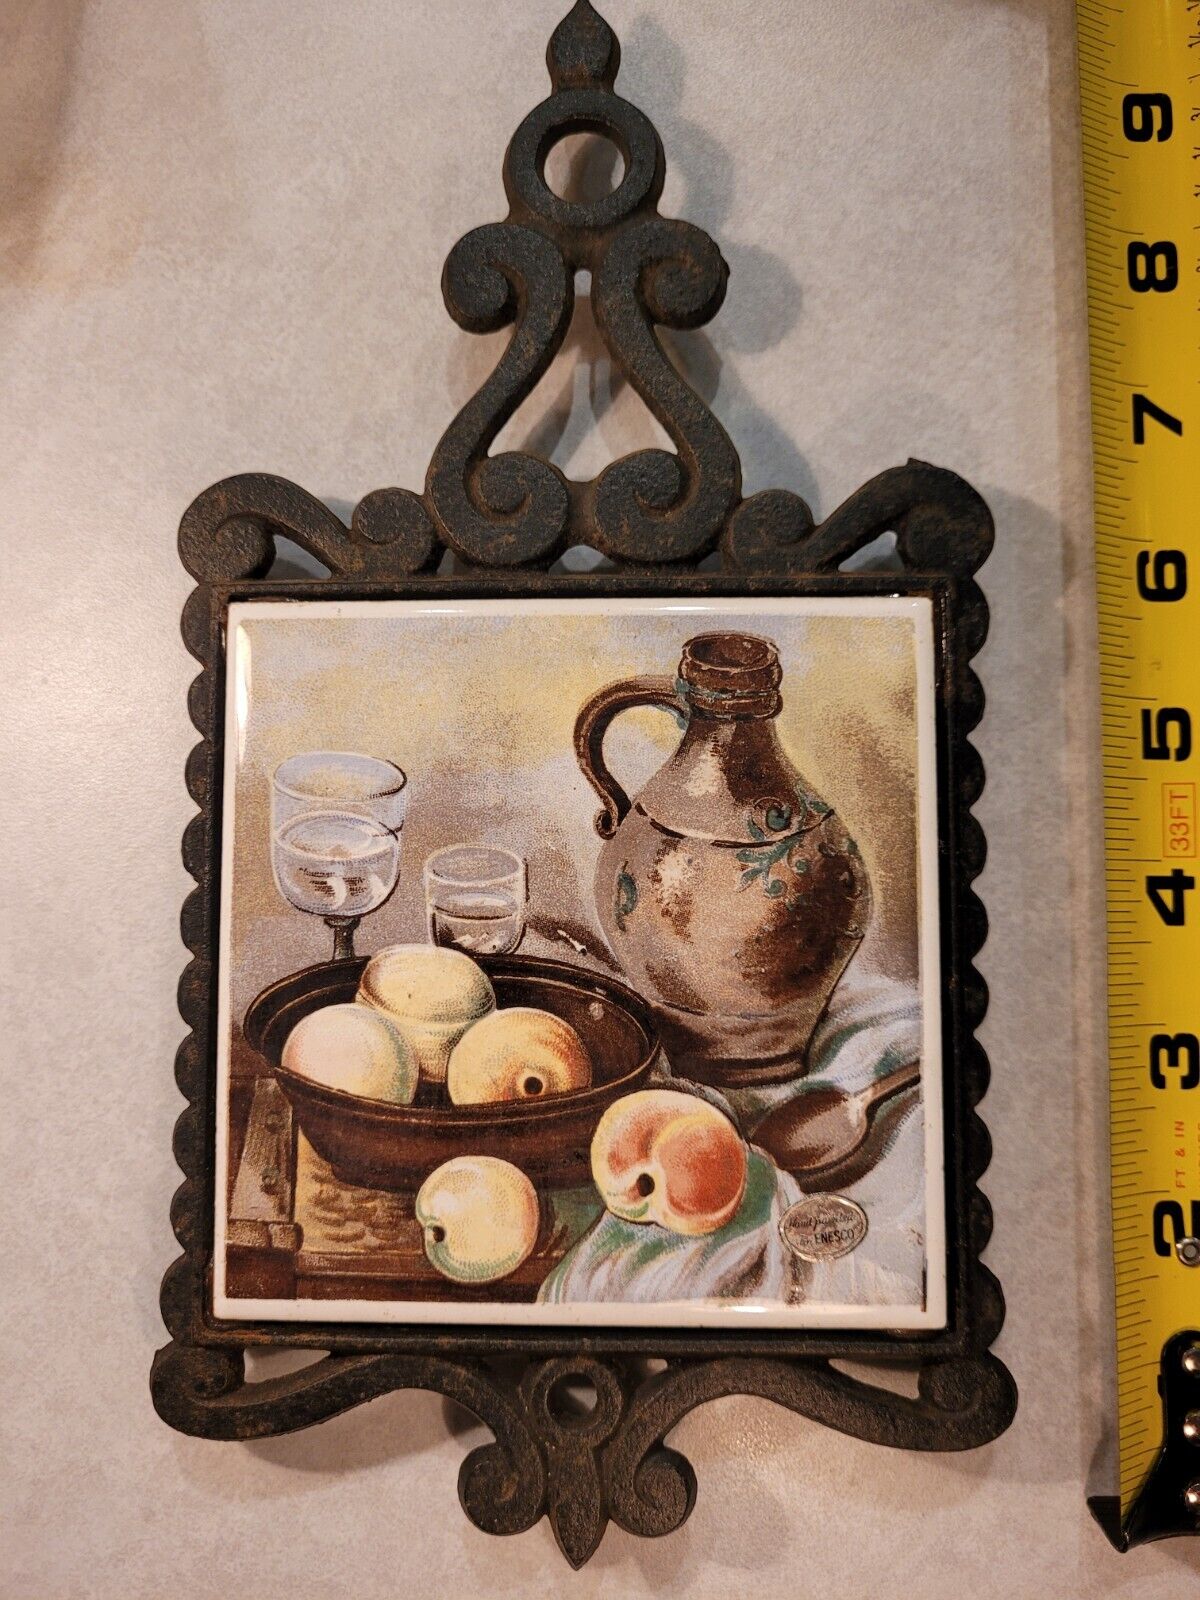 Enesco Black Iron Ceramic Wall Counter Trivet Japan Painted Pitcher Fruit peach